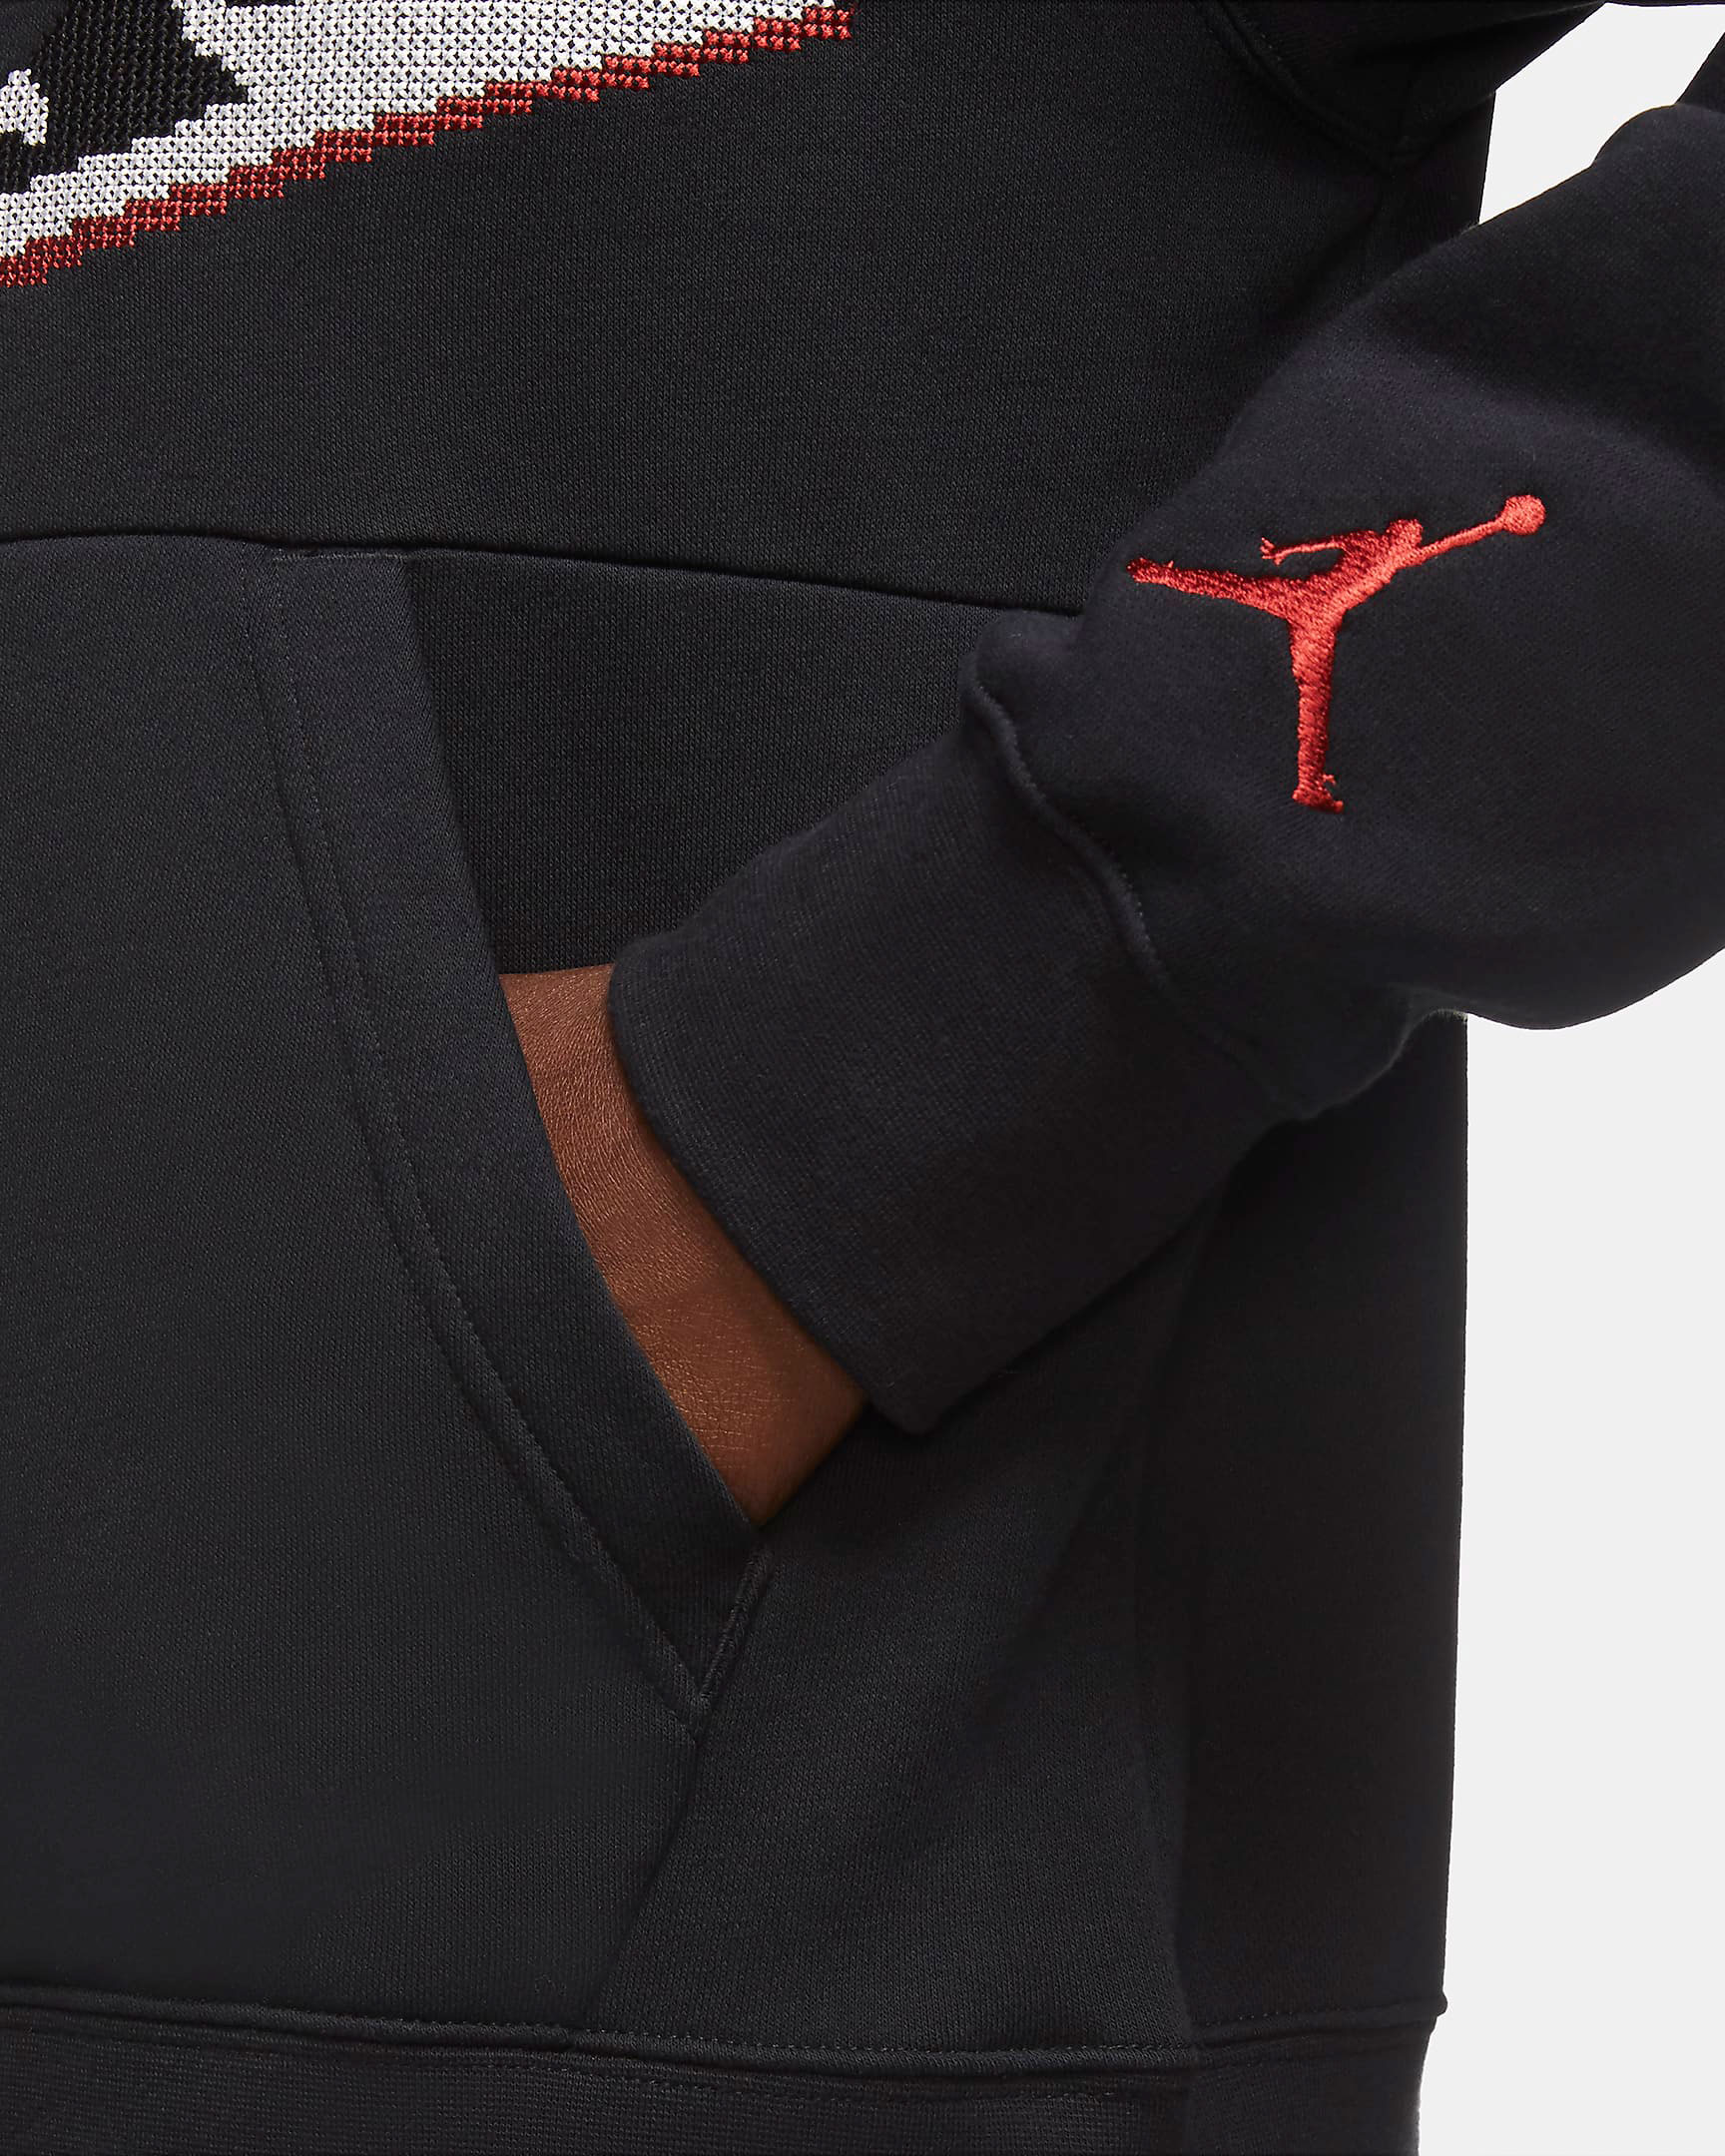 jordan-aj1-knit-stocking-holiday-hoodie-black-3